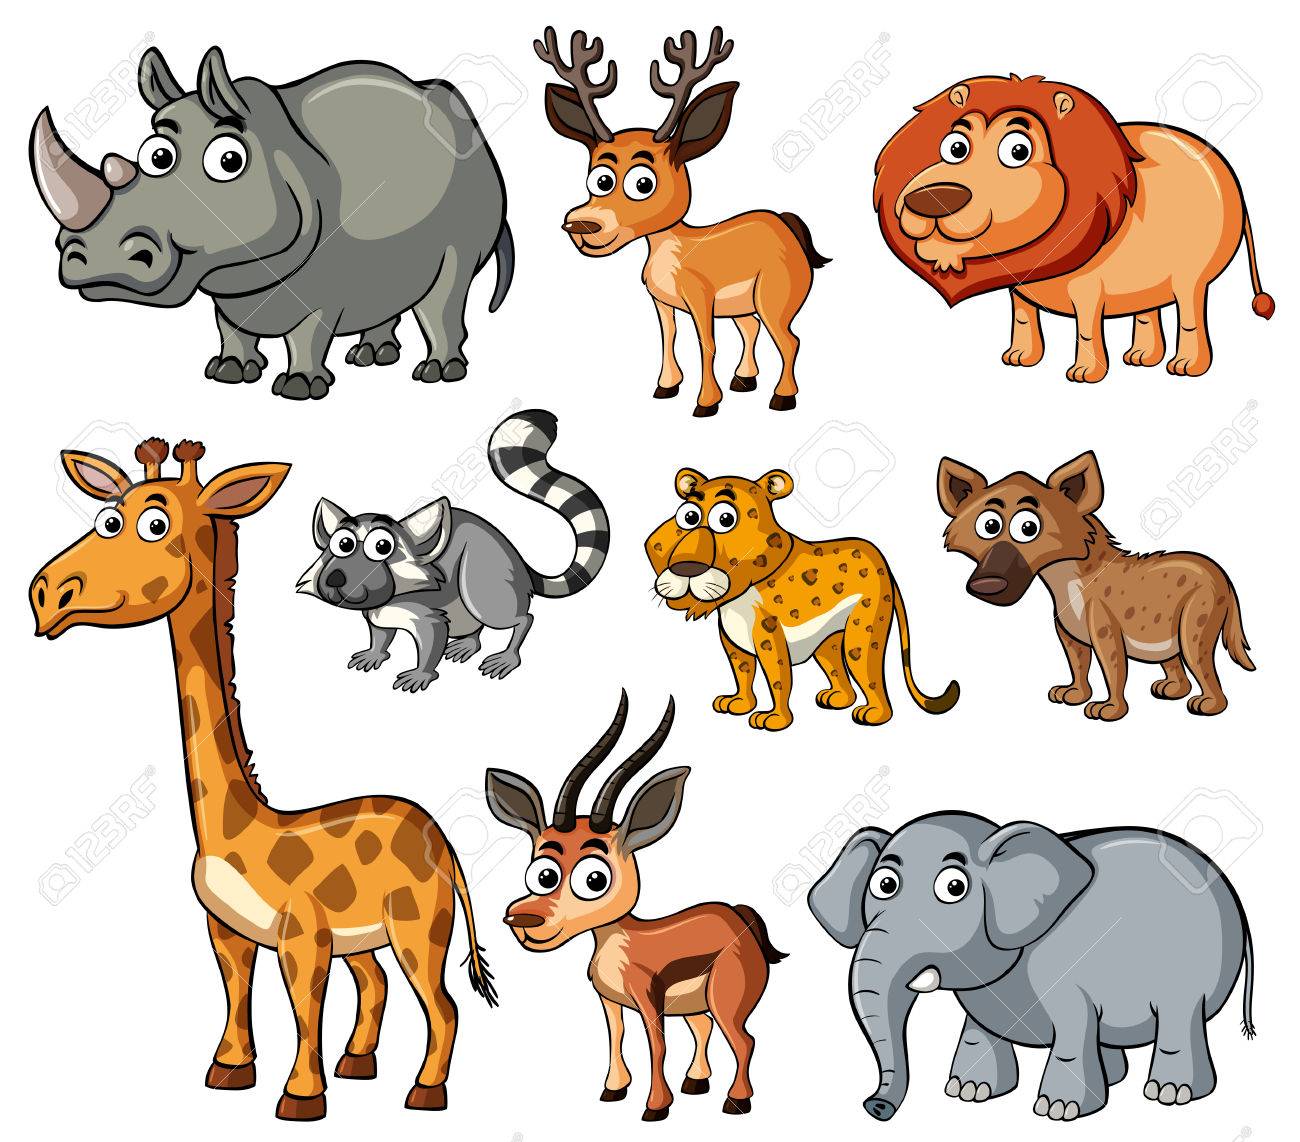 Different kinds of wild animals illustration.